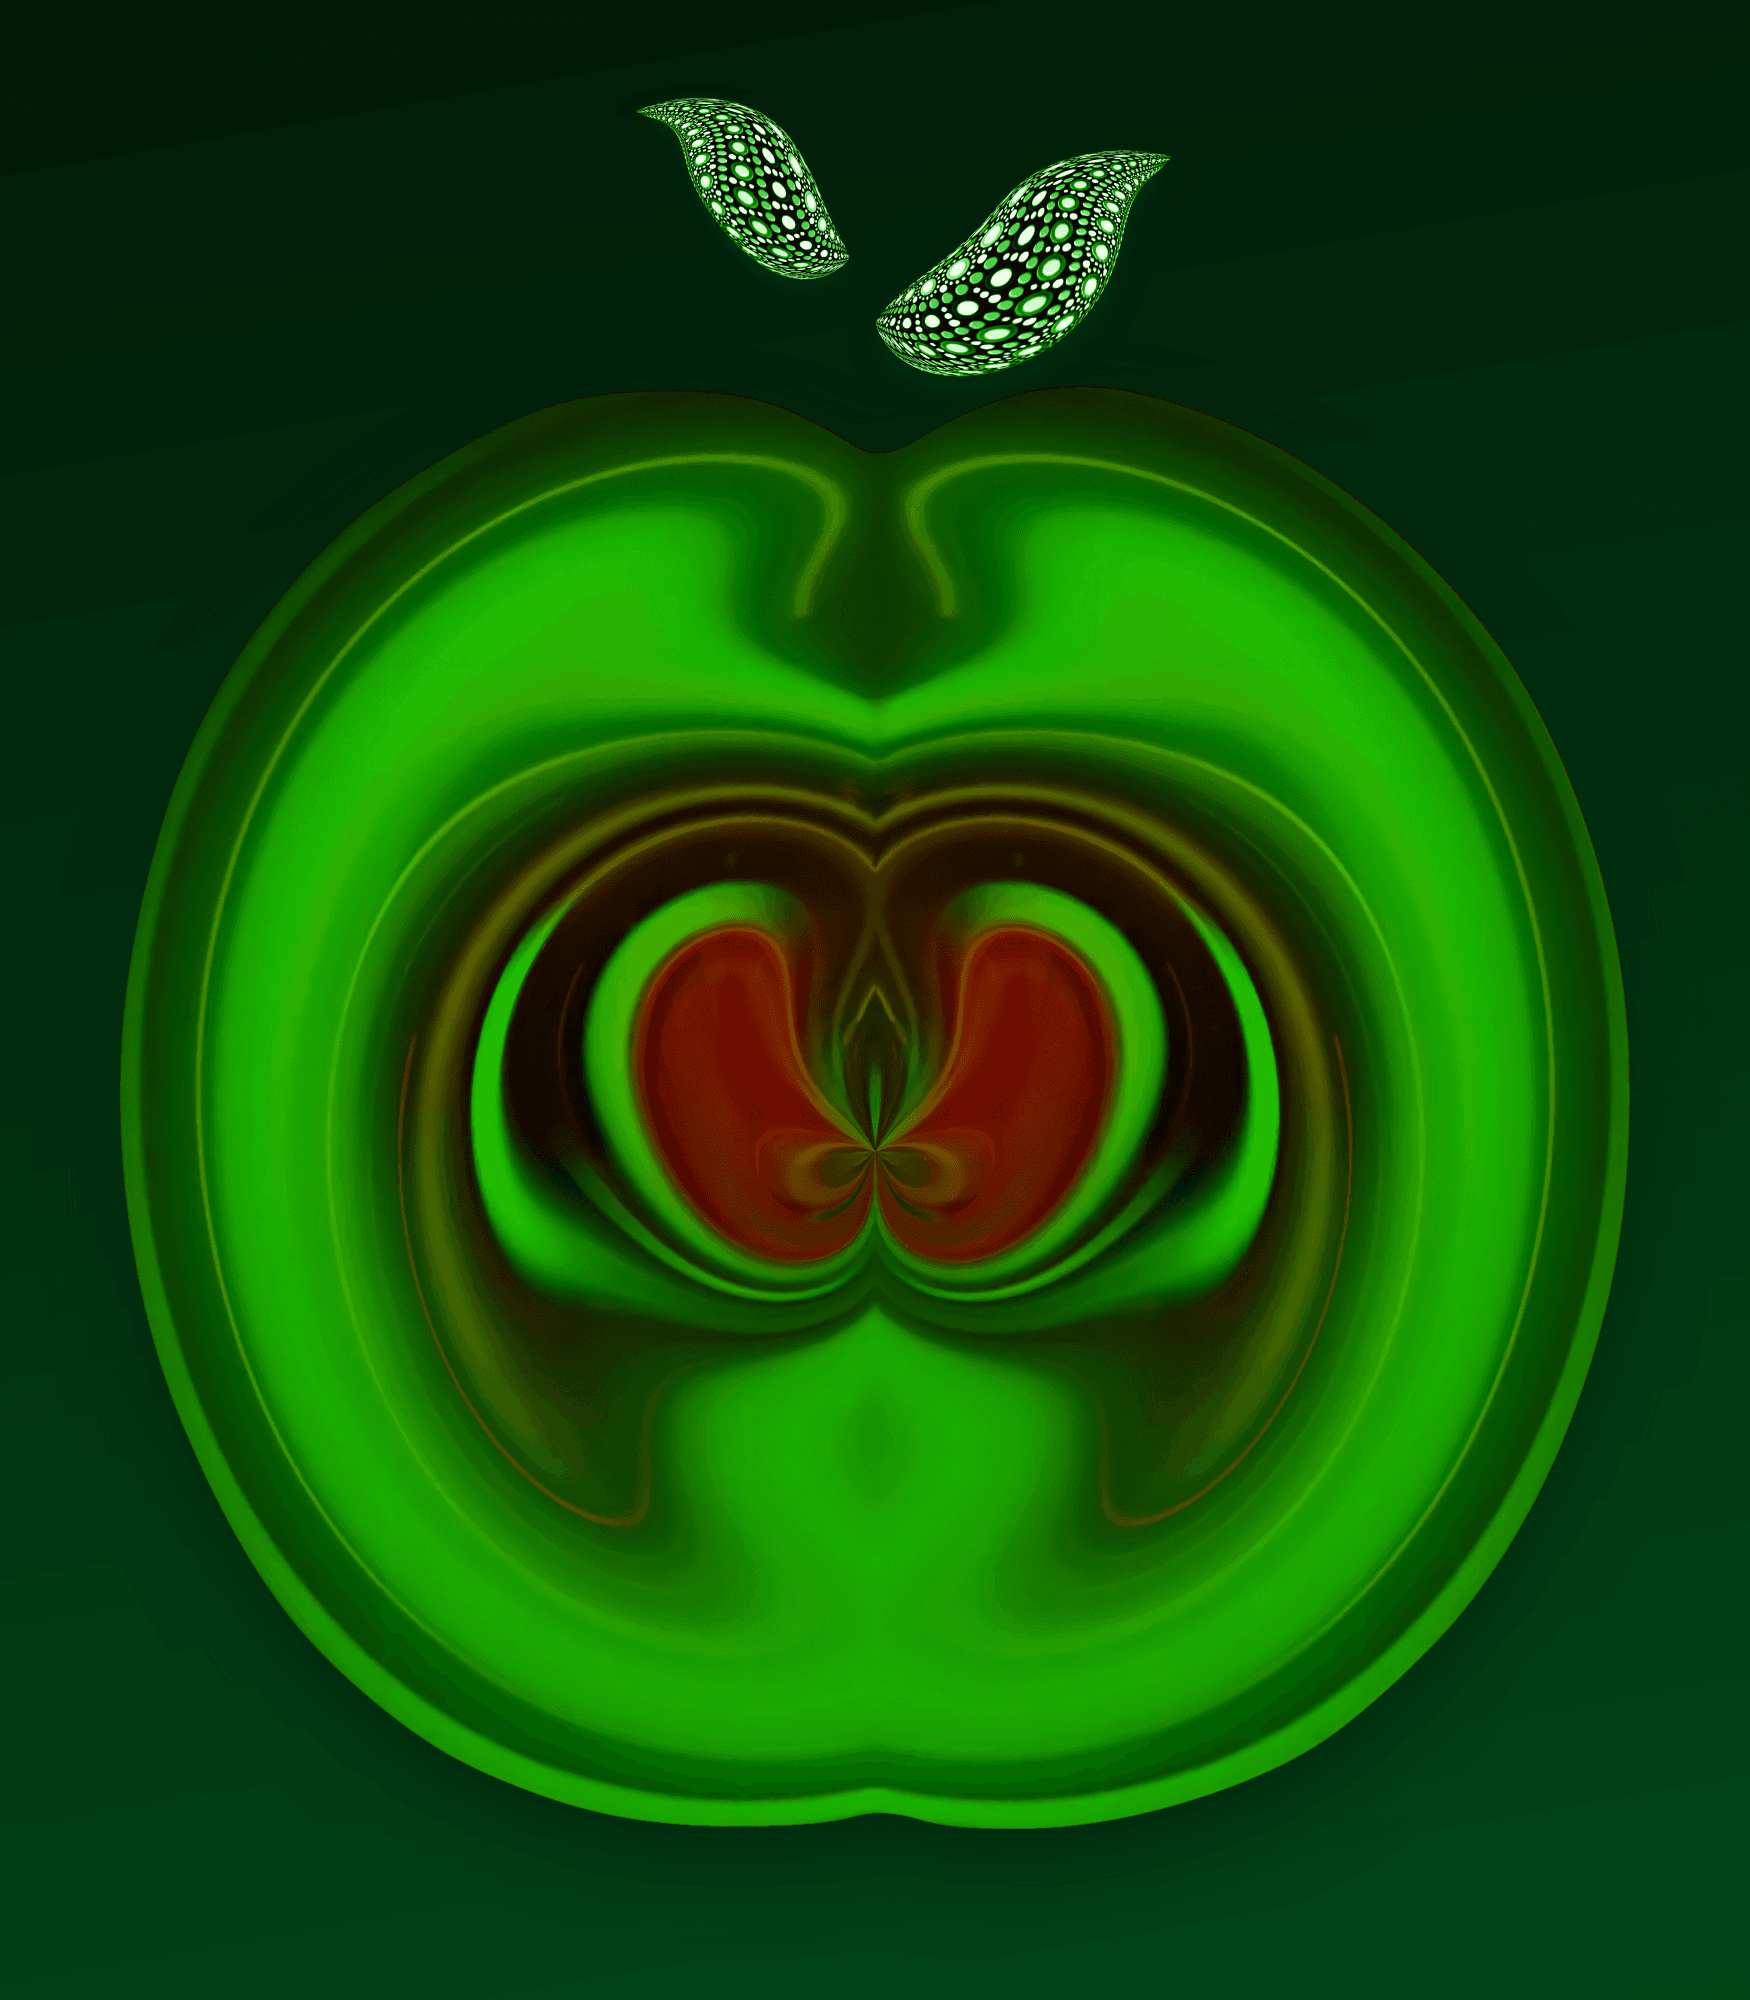 iPat-002 Green Apple